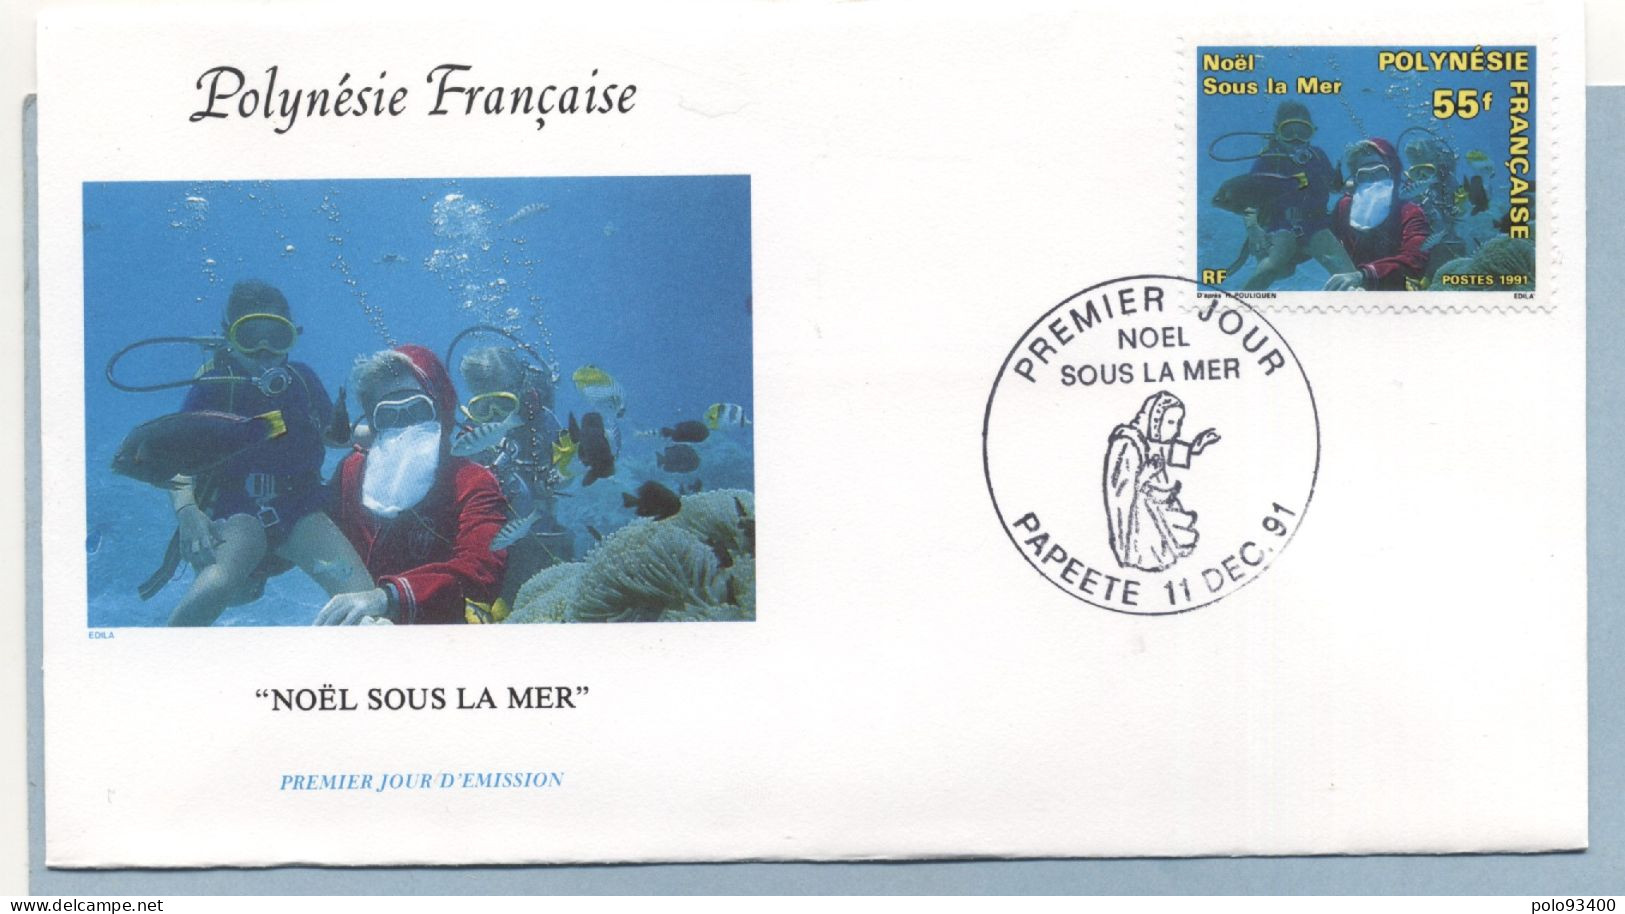 1991 NOEL SOUS LA MER 55 FRANCS - Covers & Documents